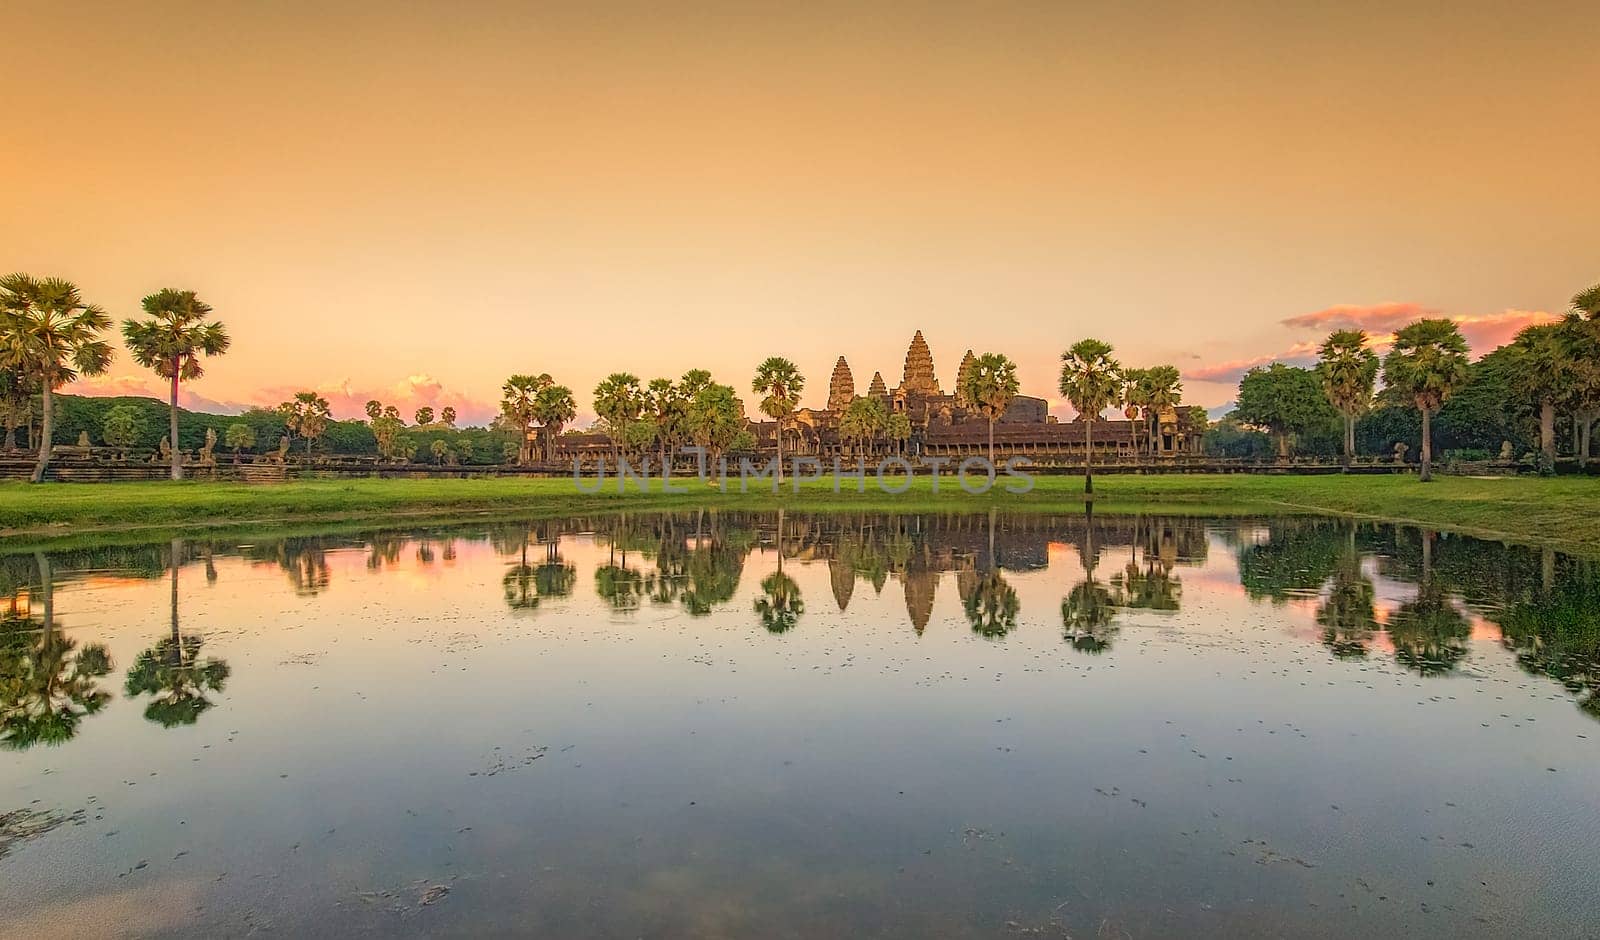 Famous Angkor Wat temple, Cambodia by Elenaphotos21